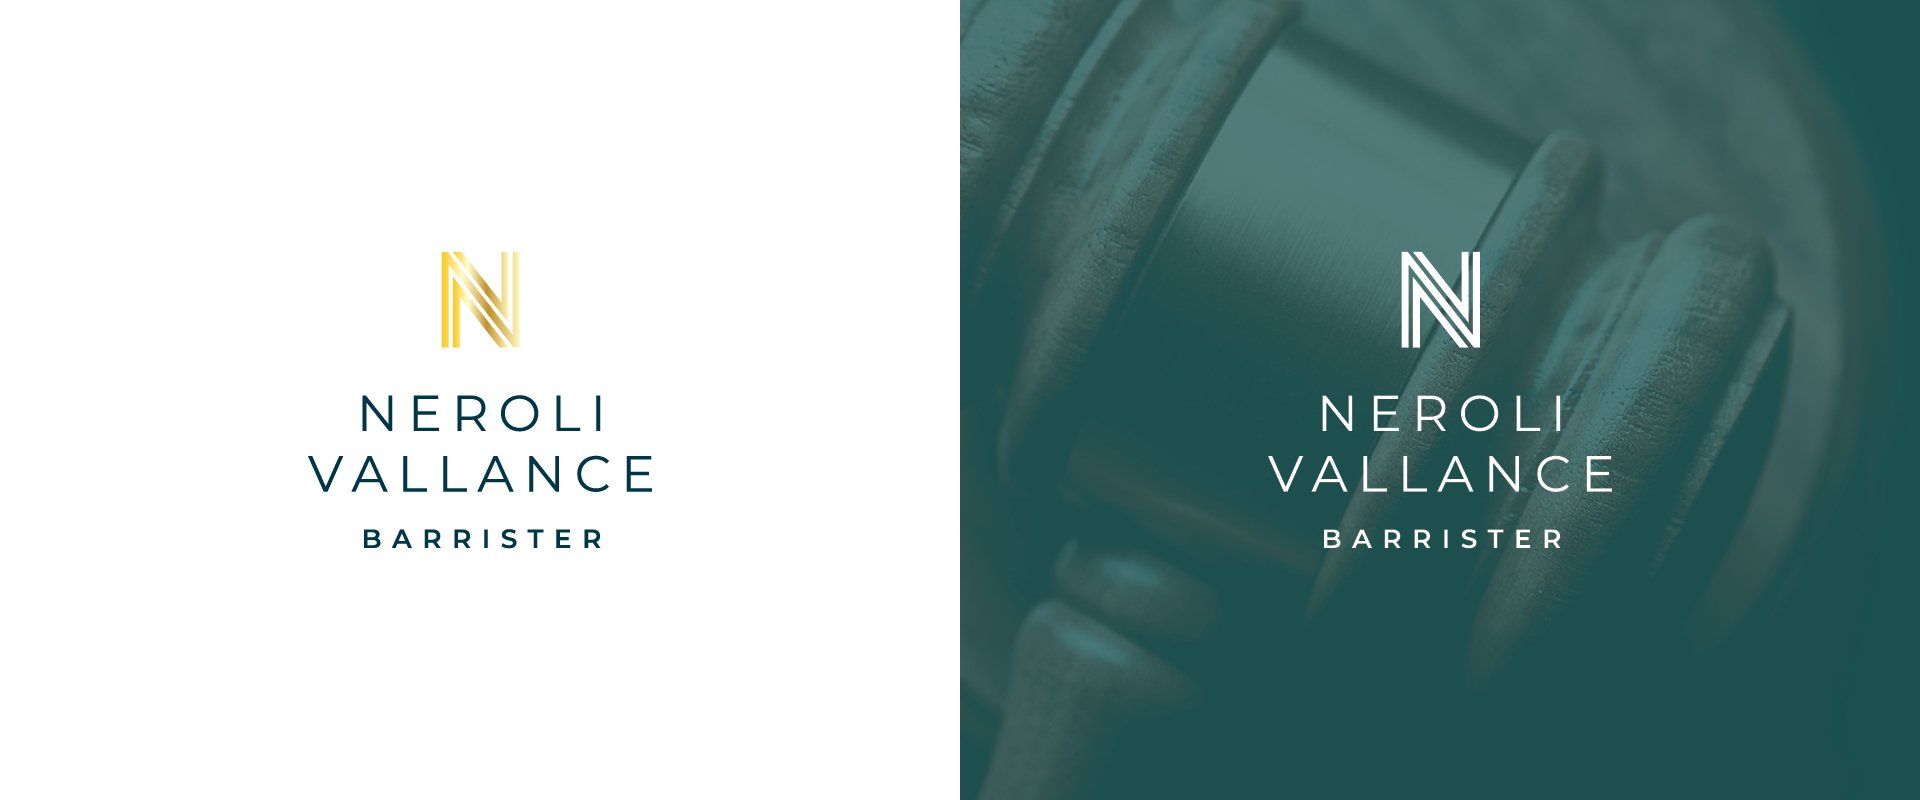 Neroli Vallance Barrister branding by Vanilla Hayes Ltd in Blenheim, New Zealand